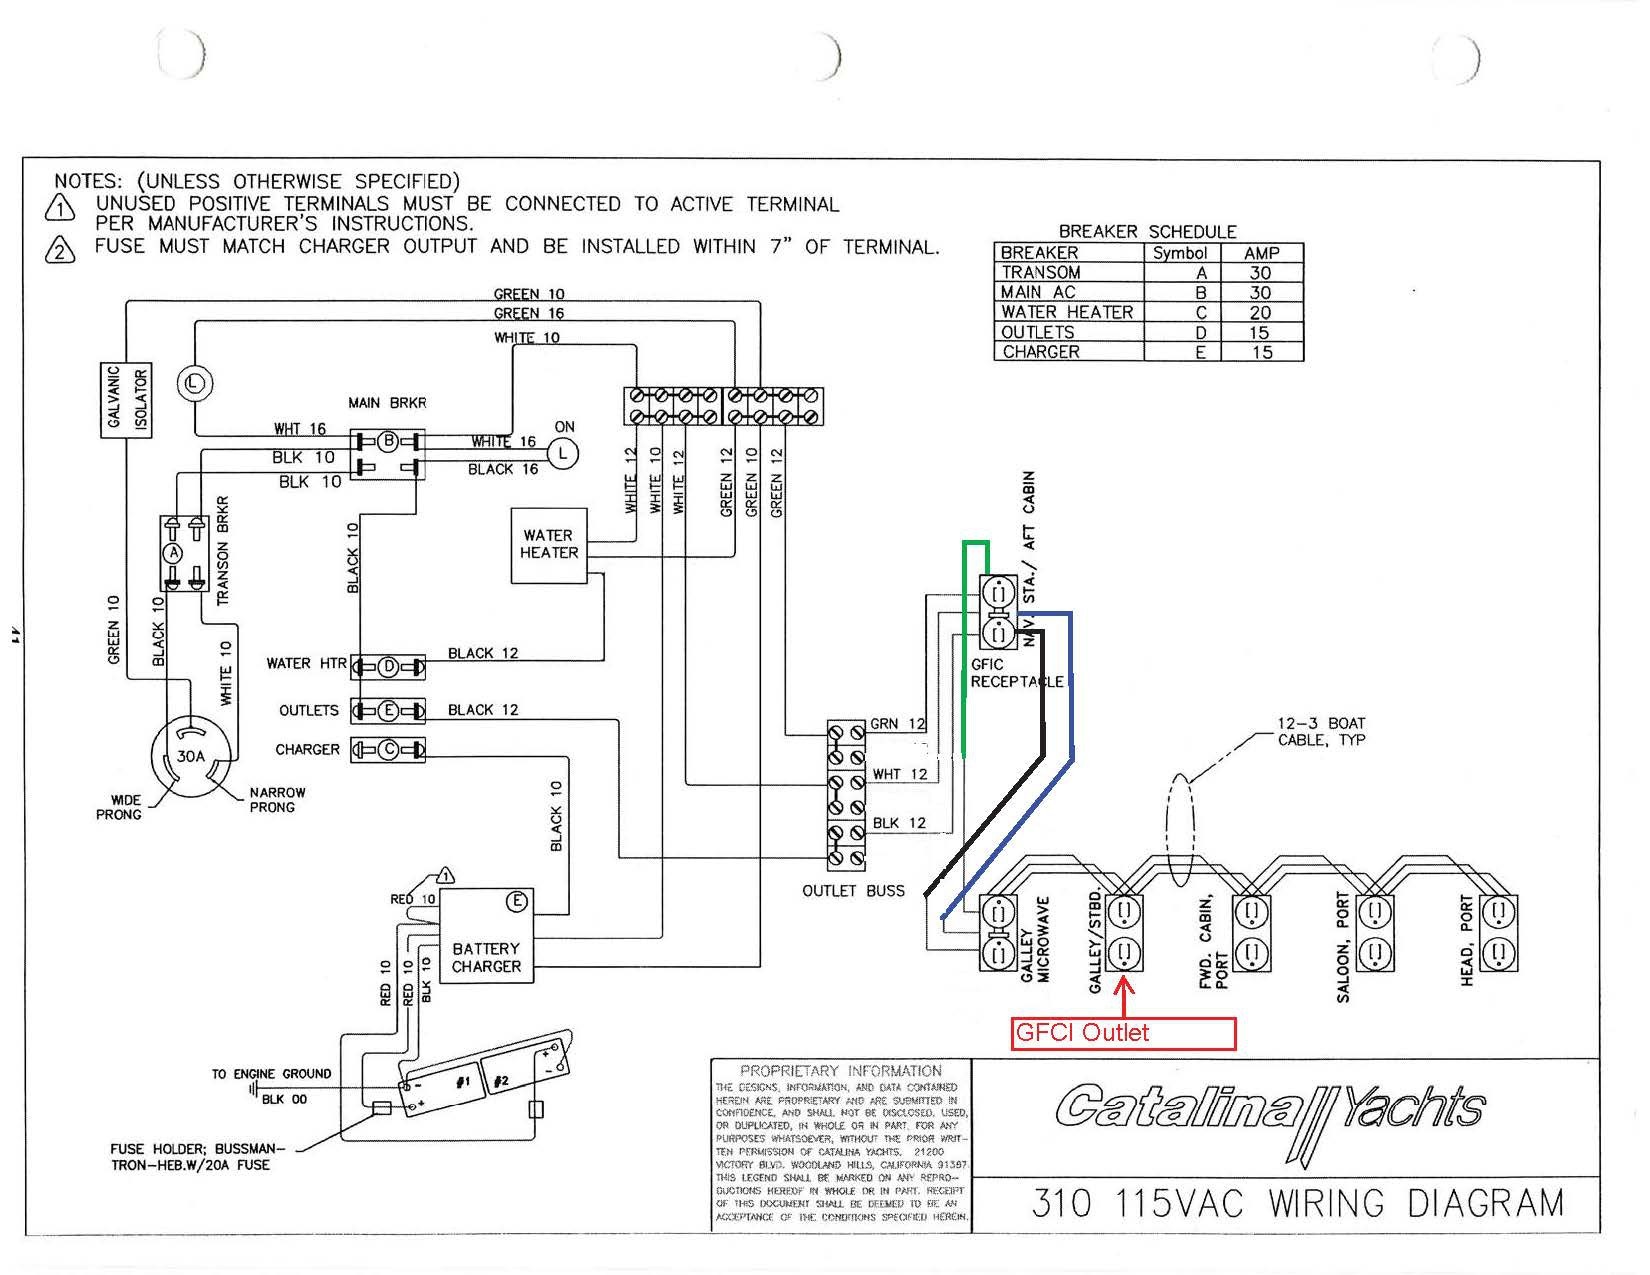 Wiring Diagrams Shop Barn Wiring Diagram Database Shop Wiring Diagram Wiring Diagram Database Electrical Wiring A Barn Amp Research Power Step Wiring